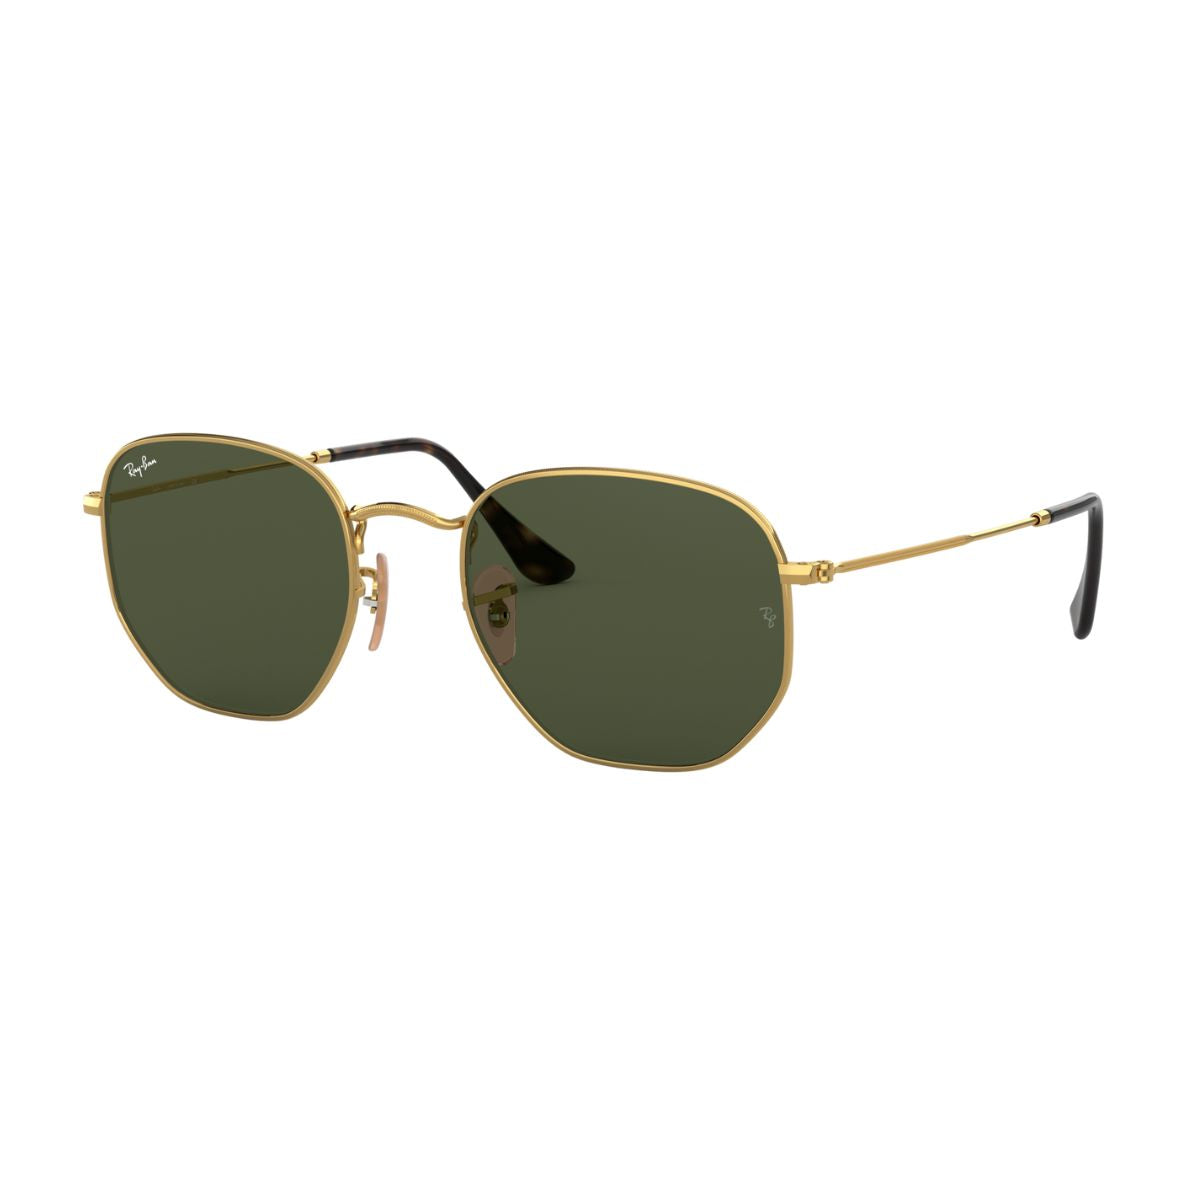 "Buy Ray Ban 3548N 001 Geometric Frame UV Sunglasses For Men And Women At Optorium"